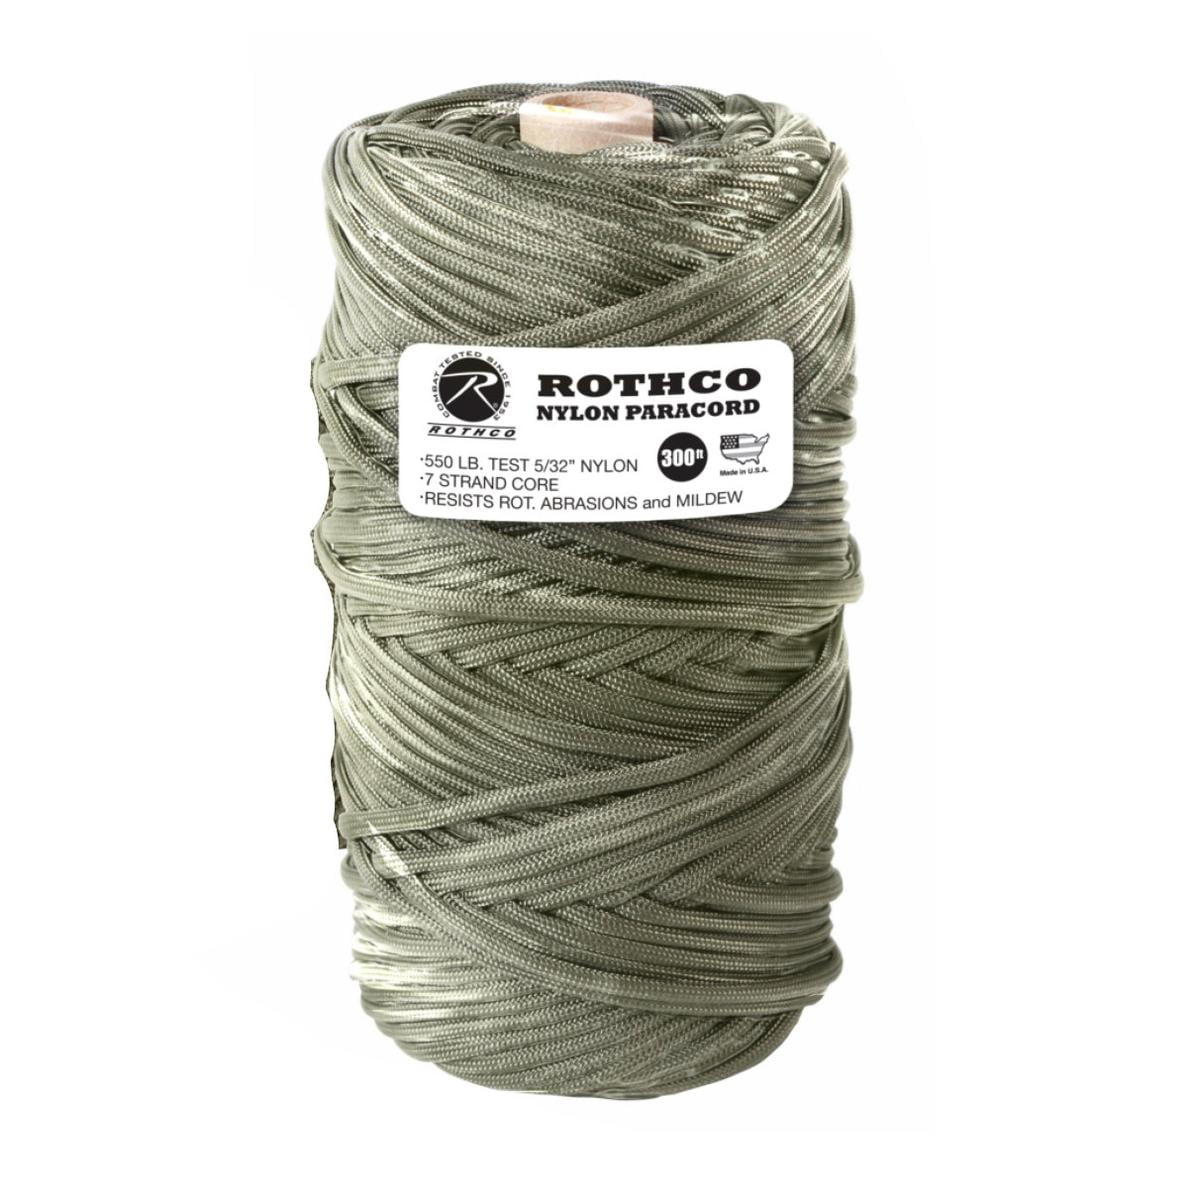 Rothco Nylon Paracord 550lb 300 Ft Tube, Olive Drab, -OliveDrab